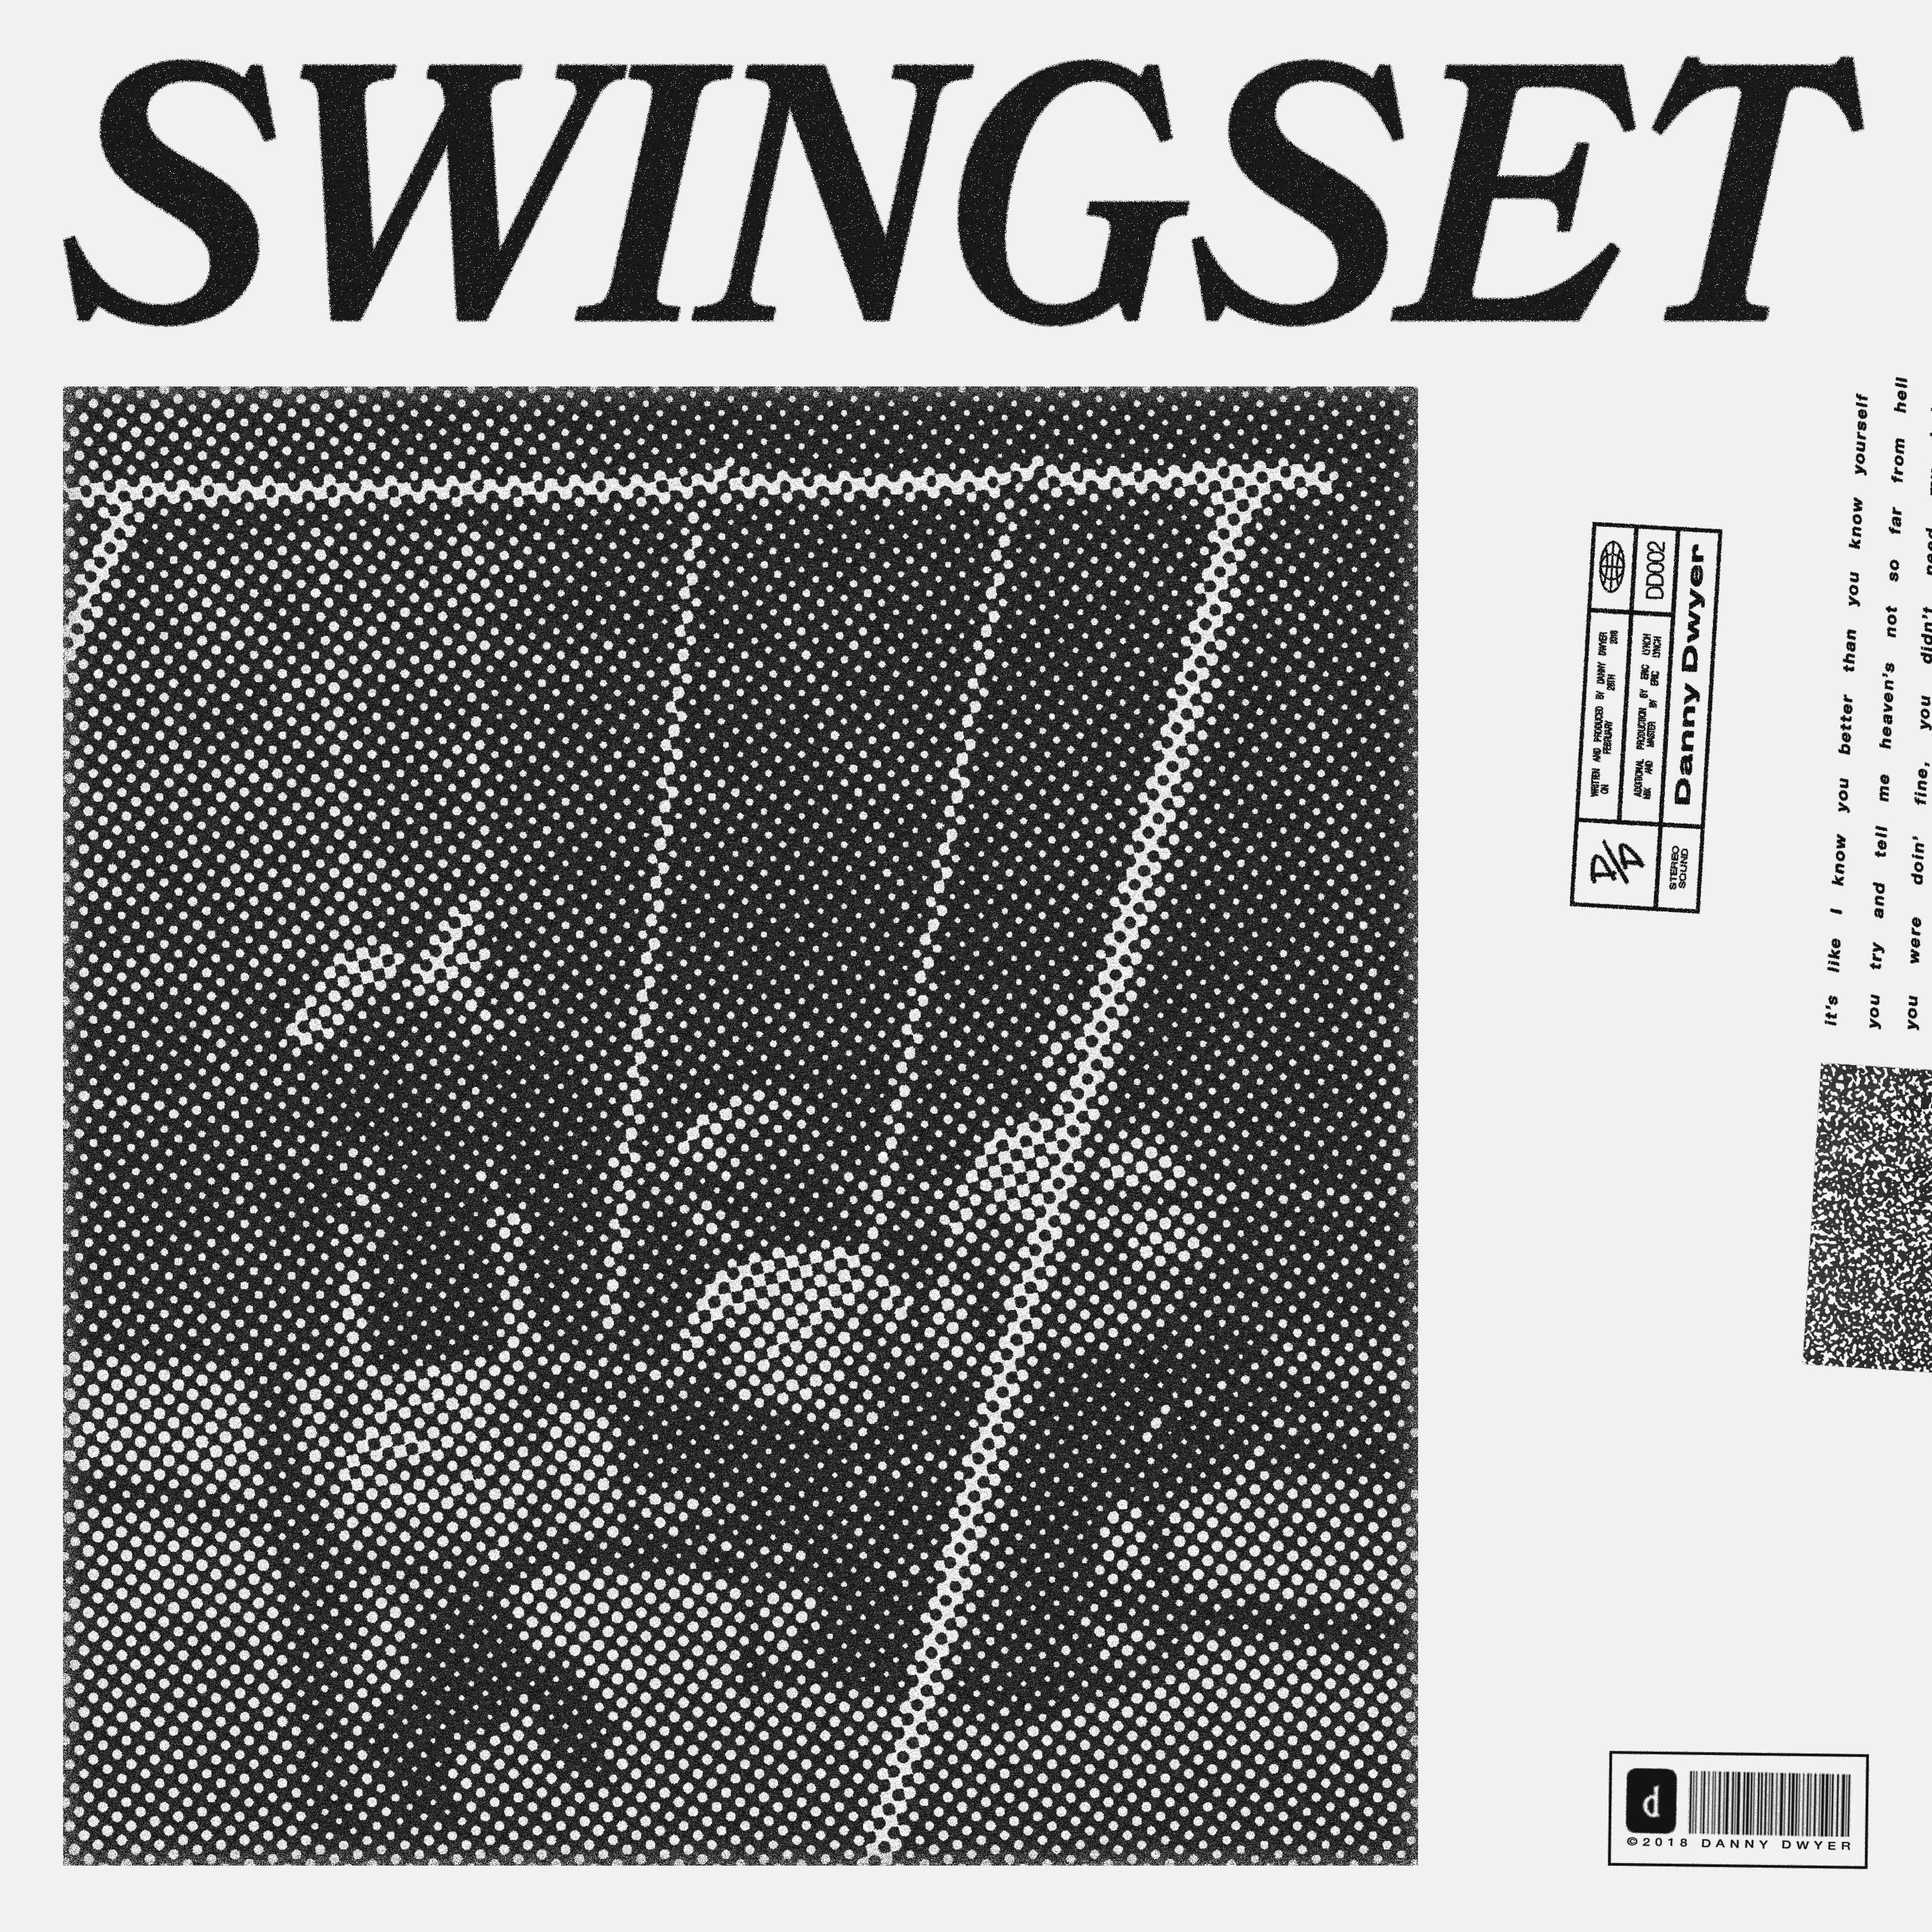 Cover art for Swingset by Danny Dwyer